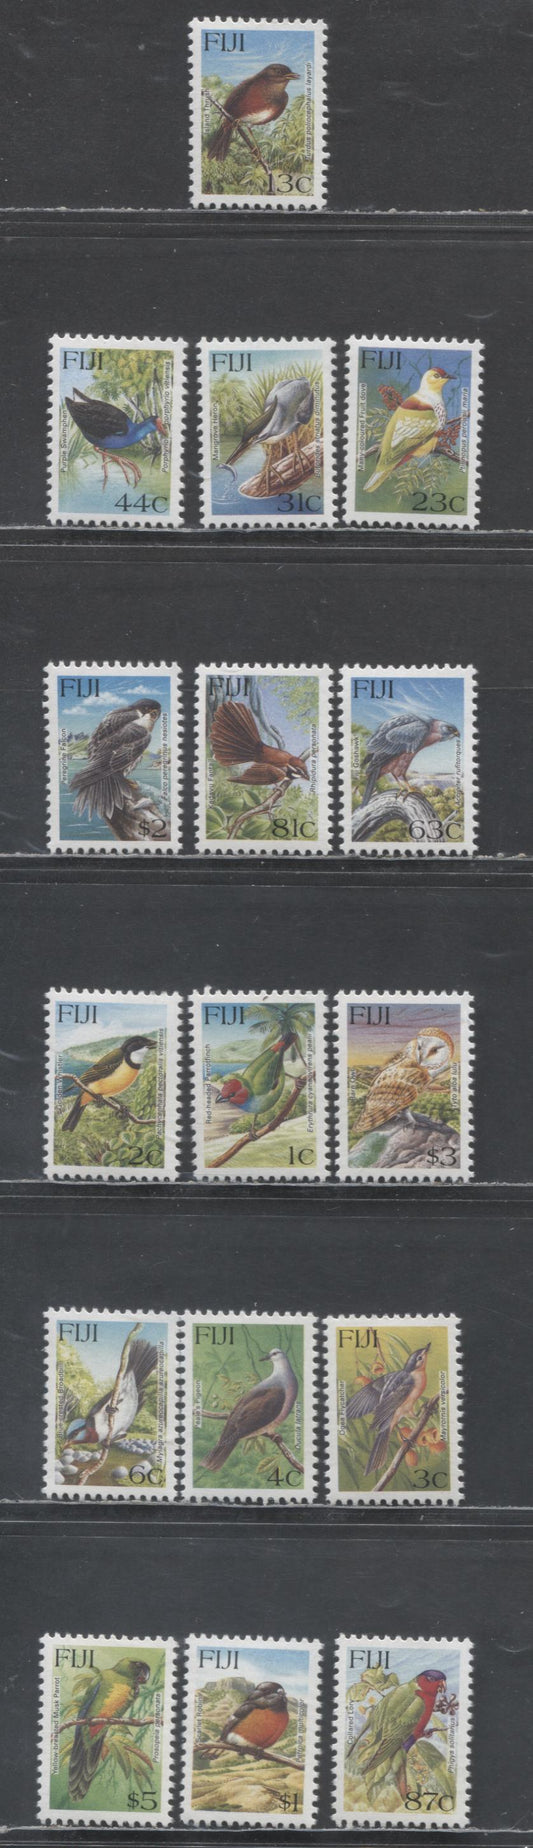 Lot 150 Fiji SC#725-739A 1995 Bird Definitives, 16 VFNH Singles, 2017 Scott Cat. $30.3